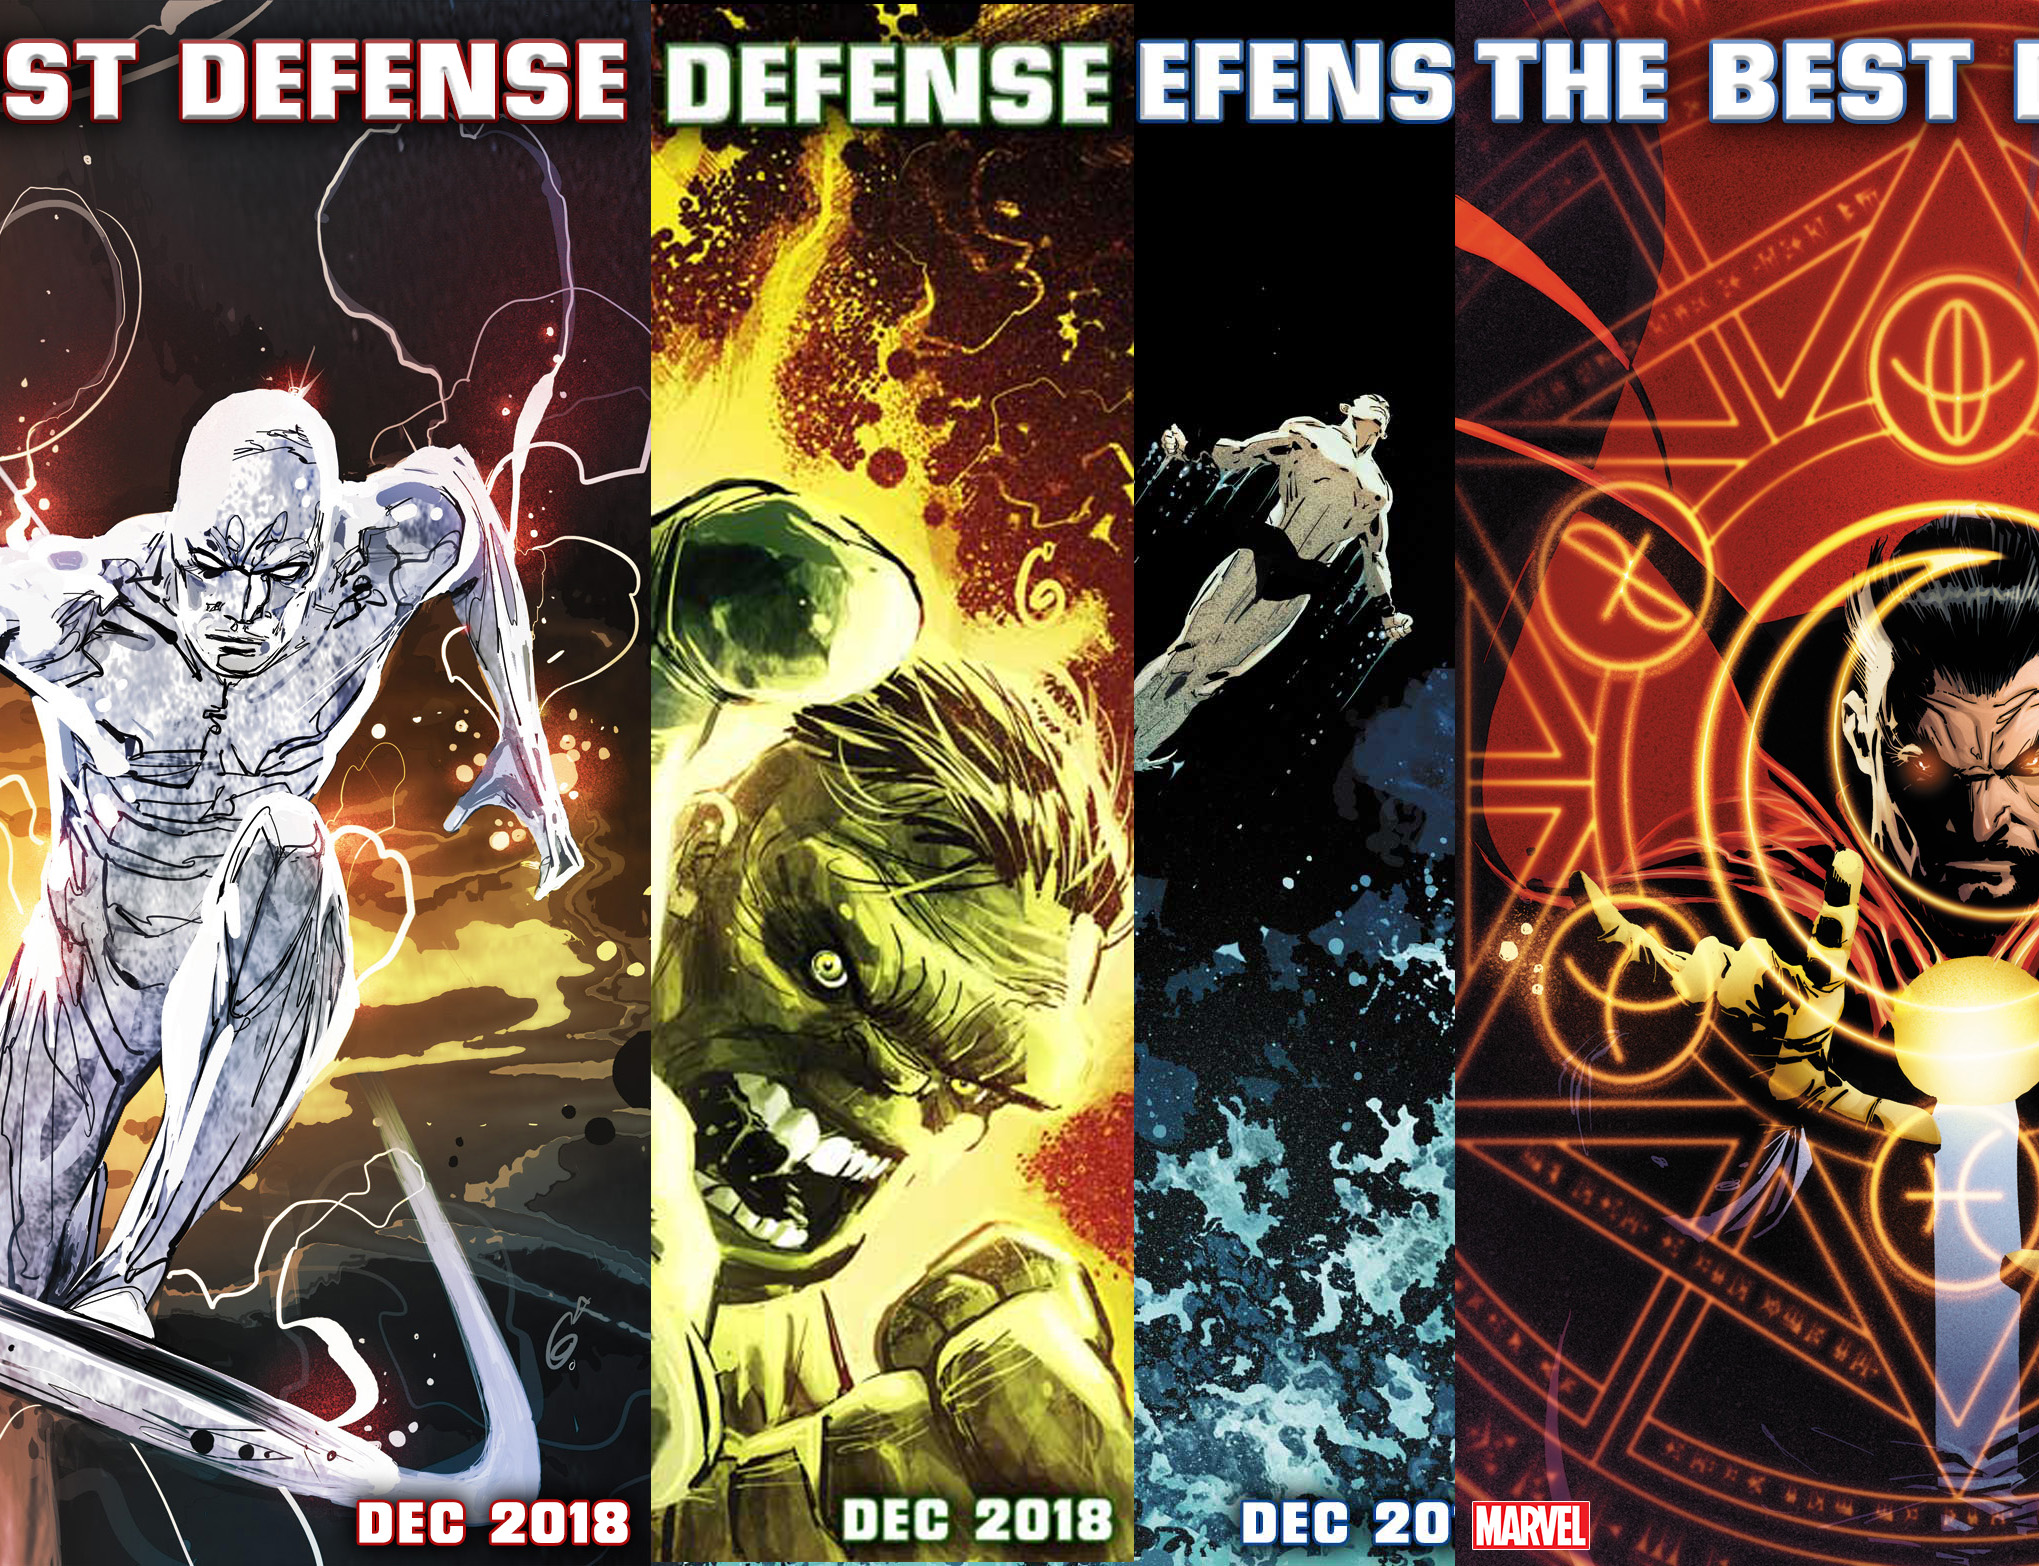 Marvel teases "The Best Defense" with character splash pages of Silver Surfer, Hulk, Namor, and Doctor Strange